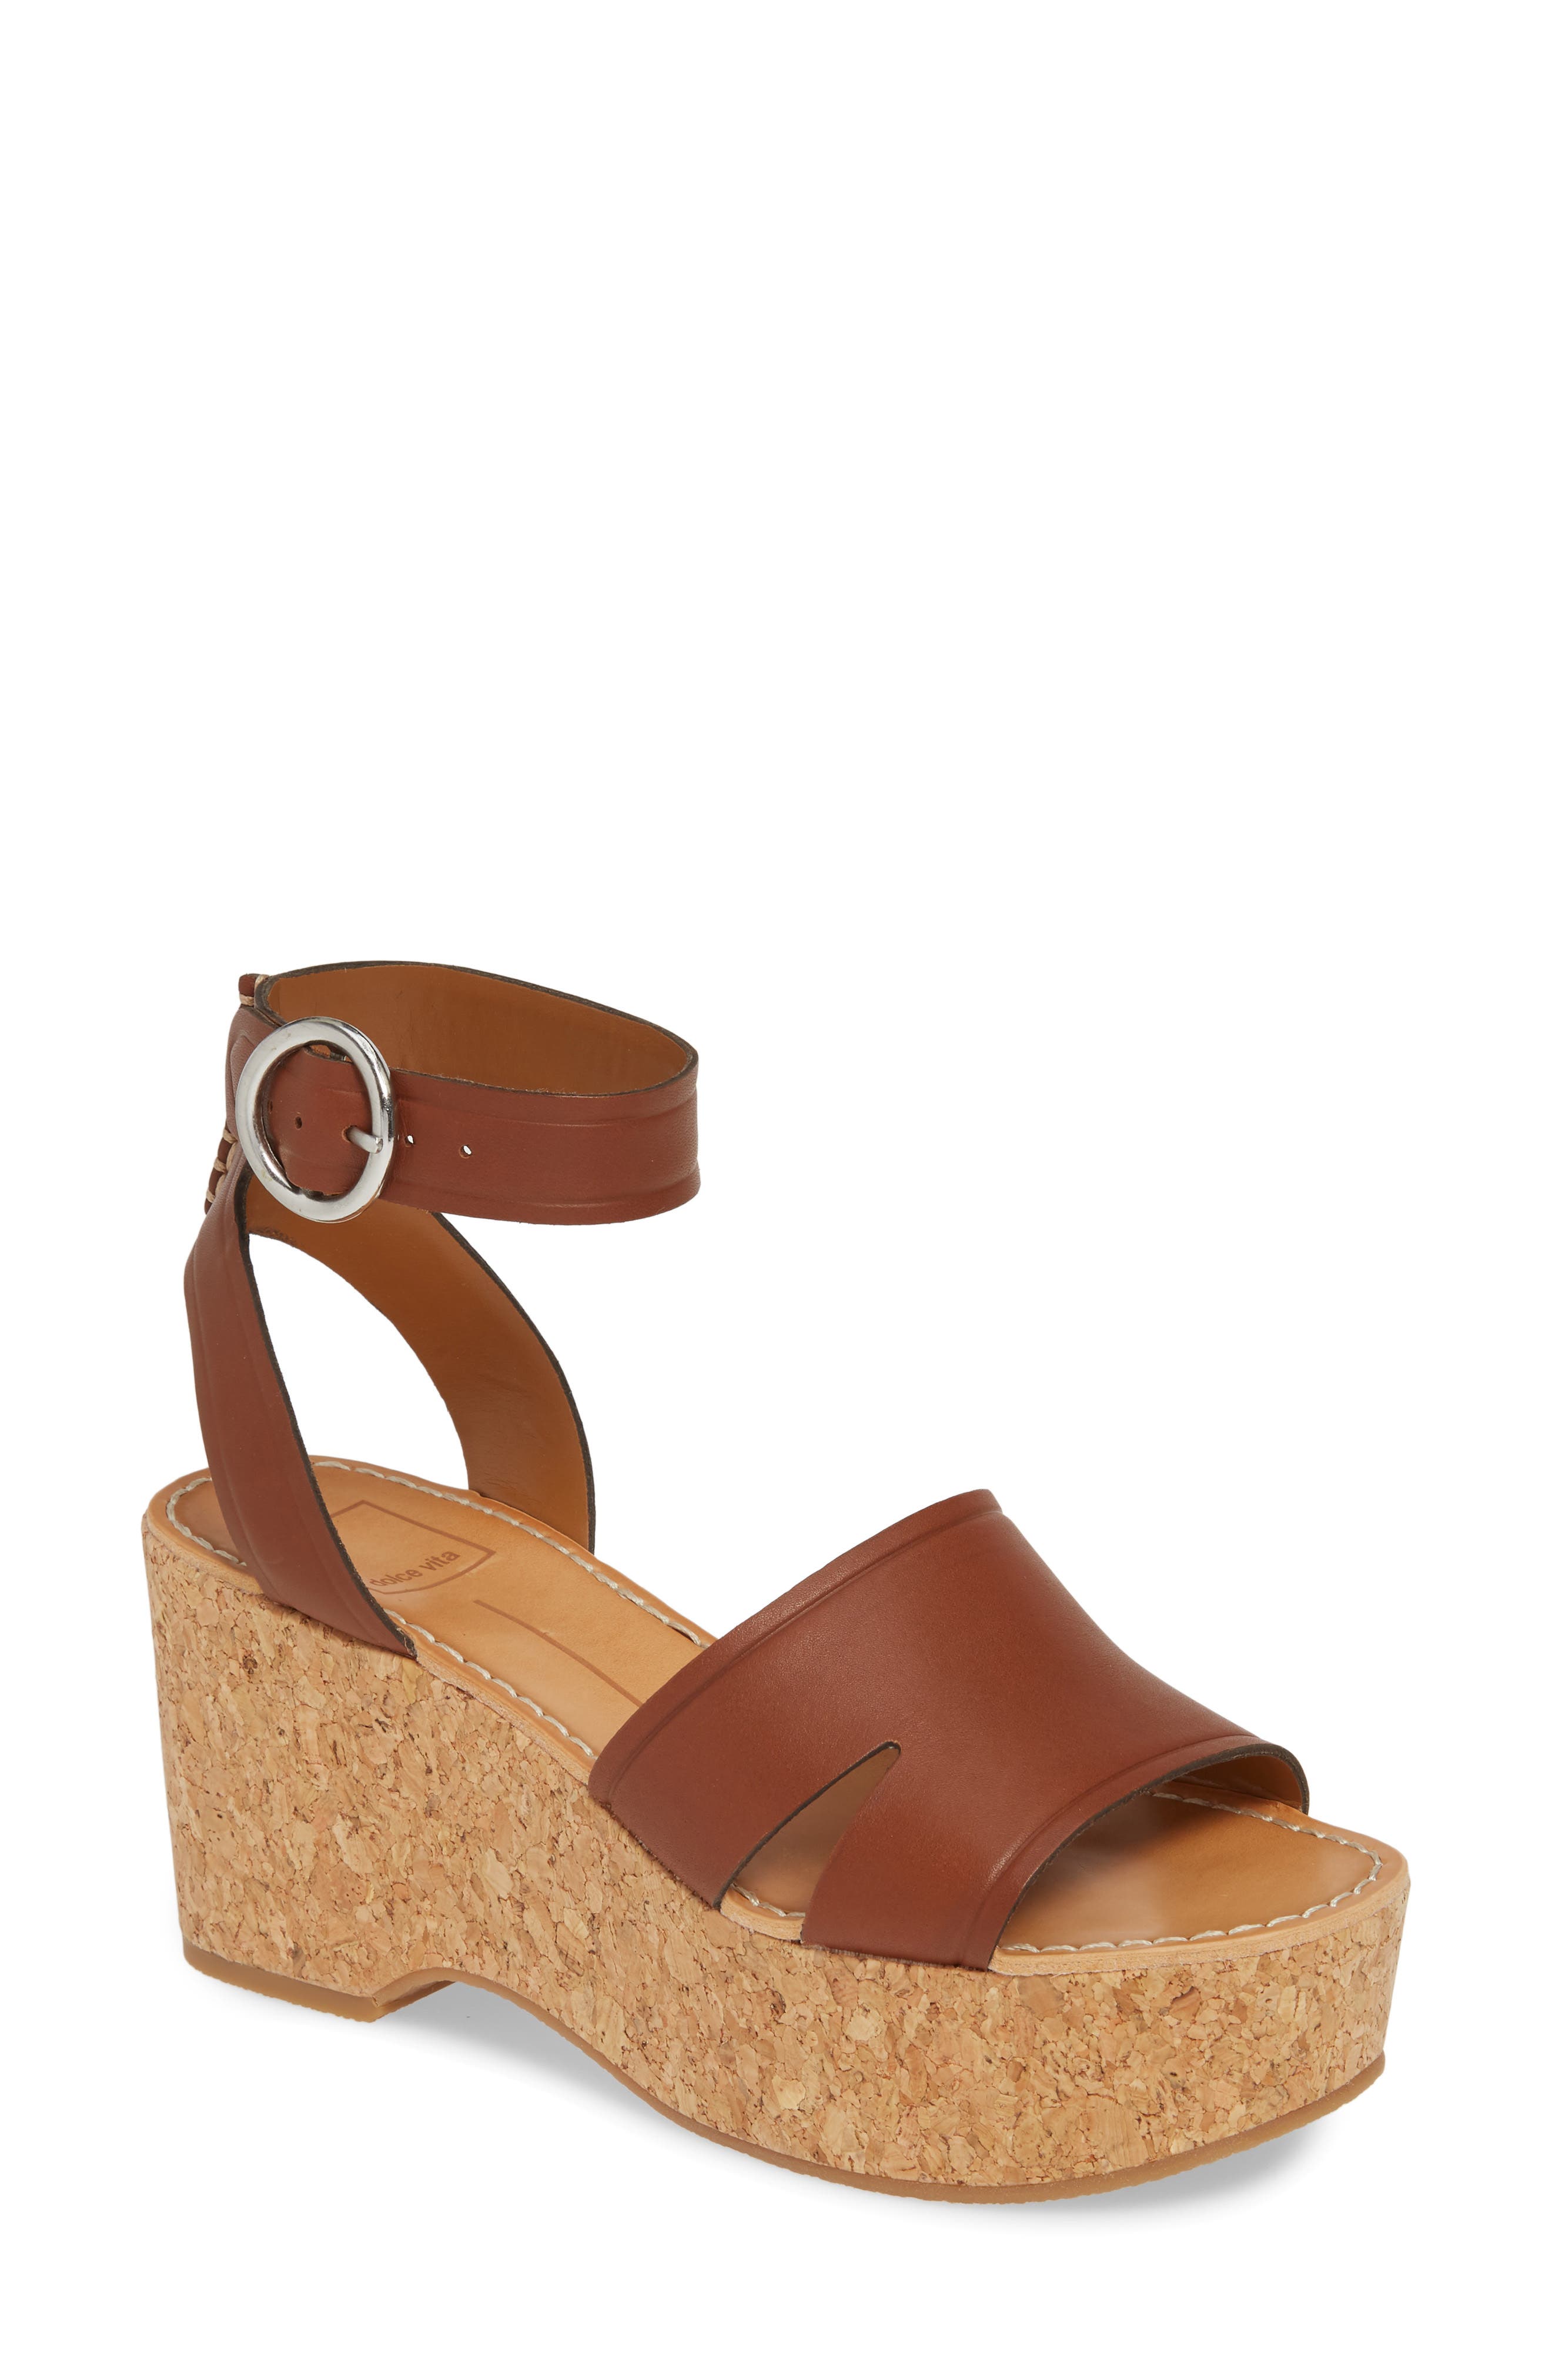 cork platform sandal